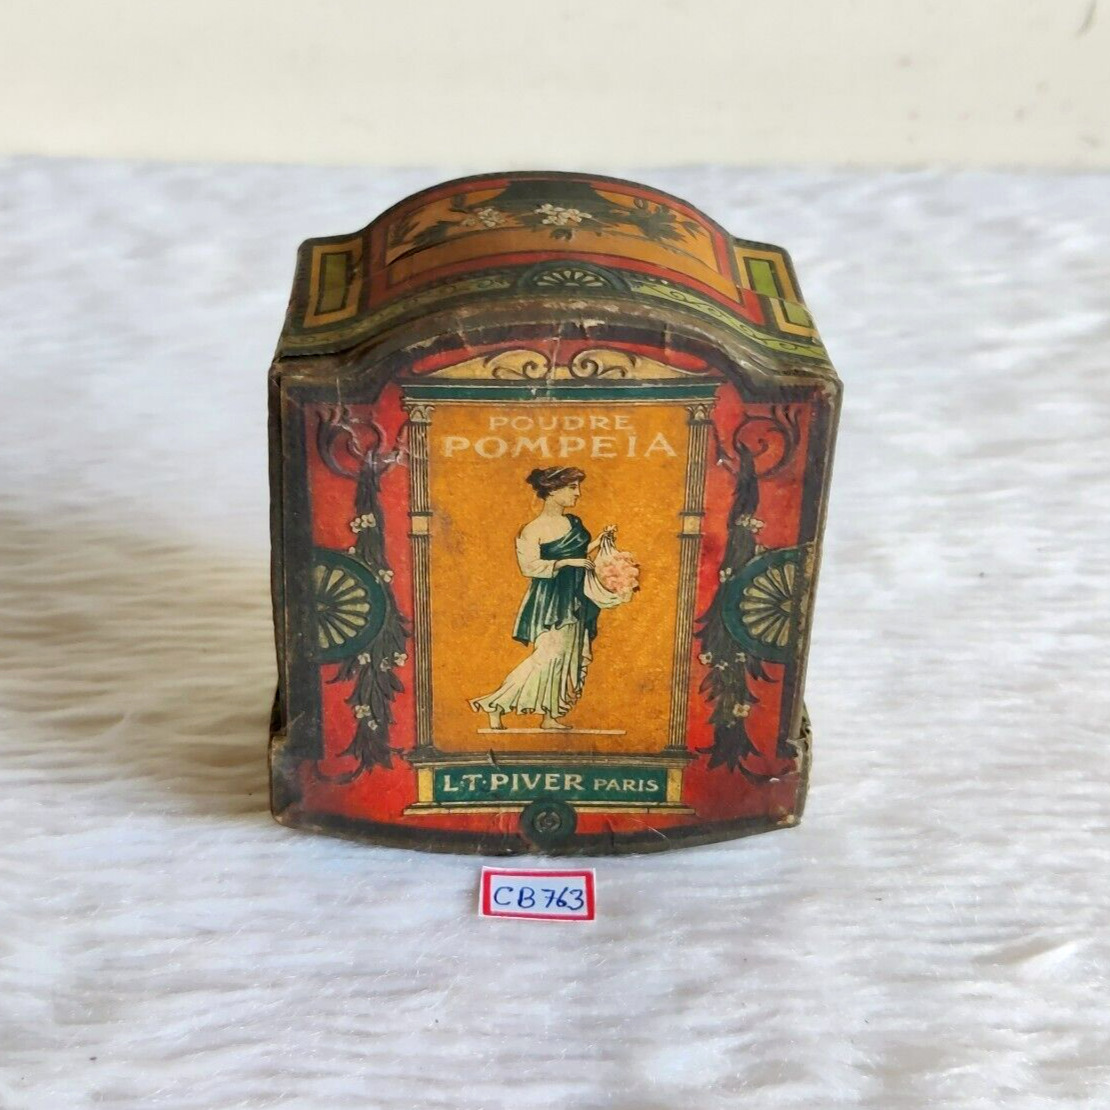 1930 Vintage LT Piver Pompeia Perfume Advertising Cardboard Box Paris Rare CB763